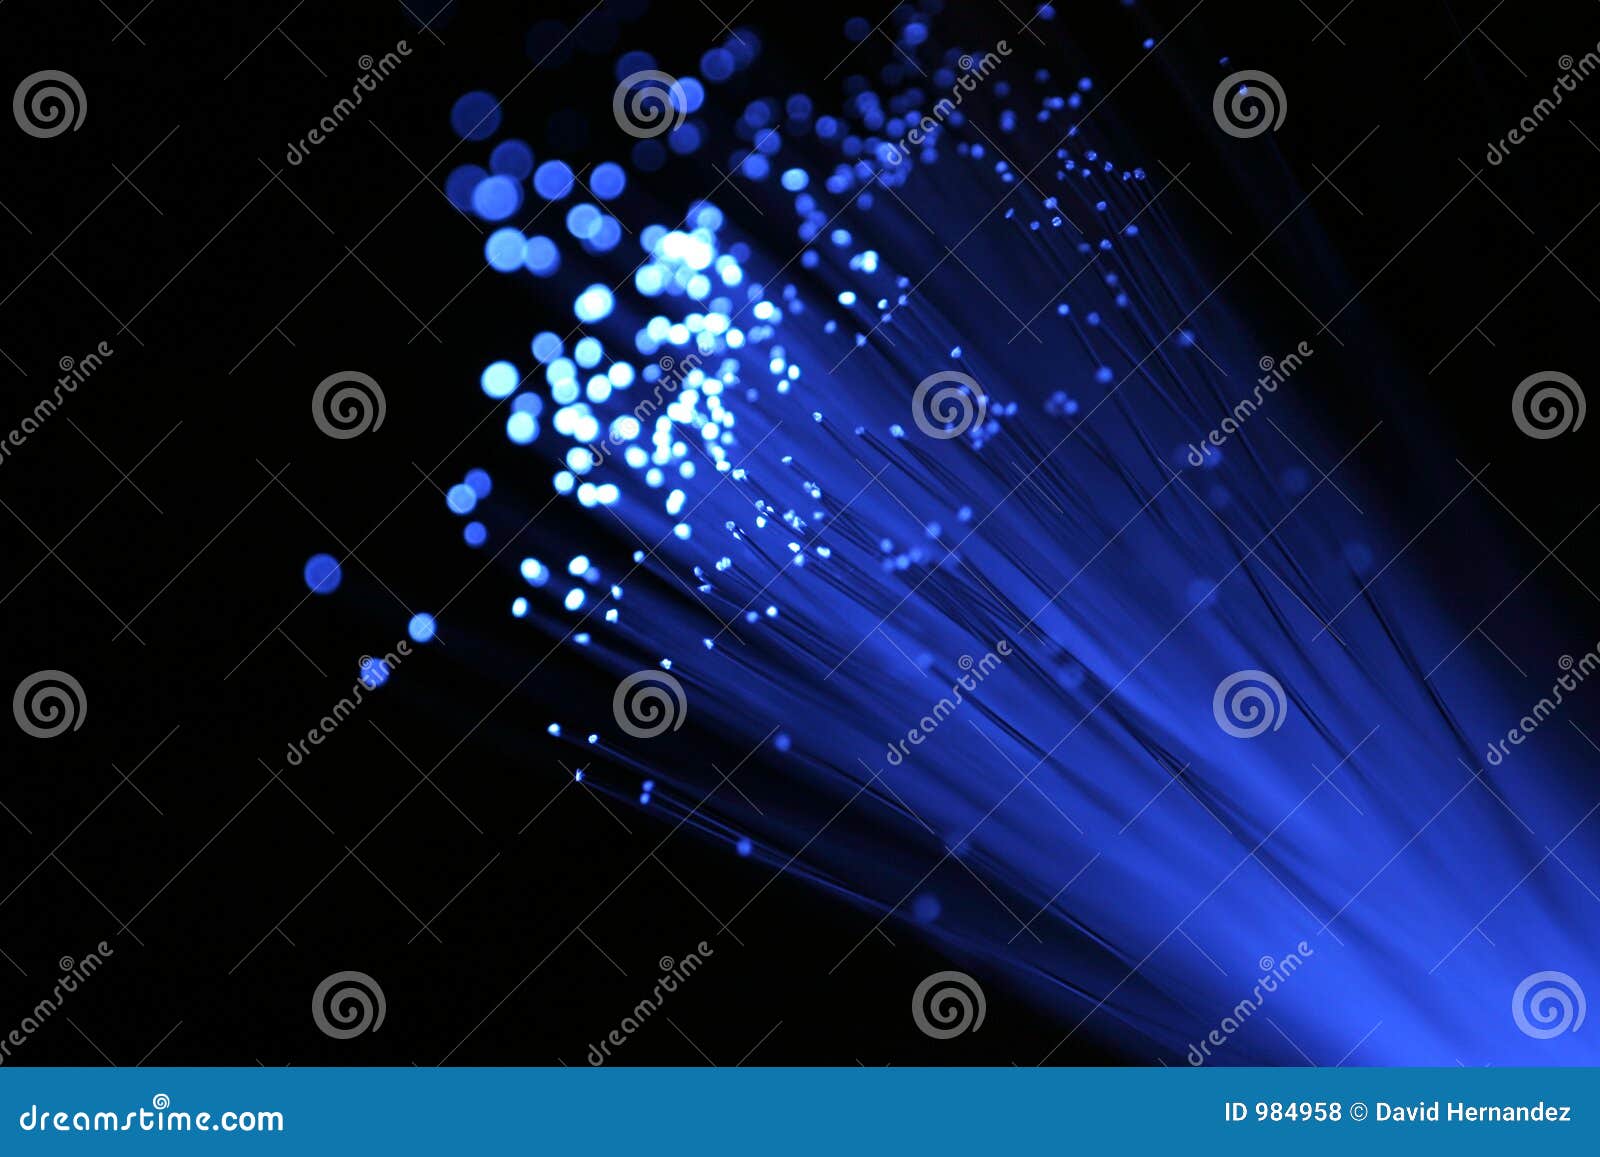 blue fiber optic cable